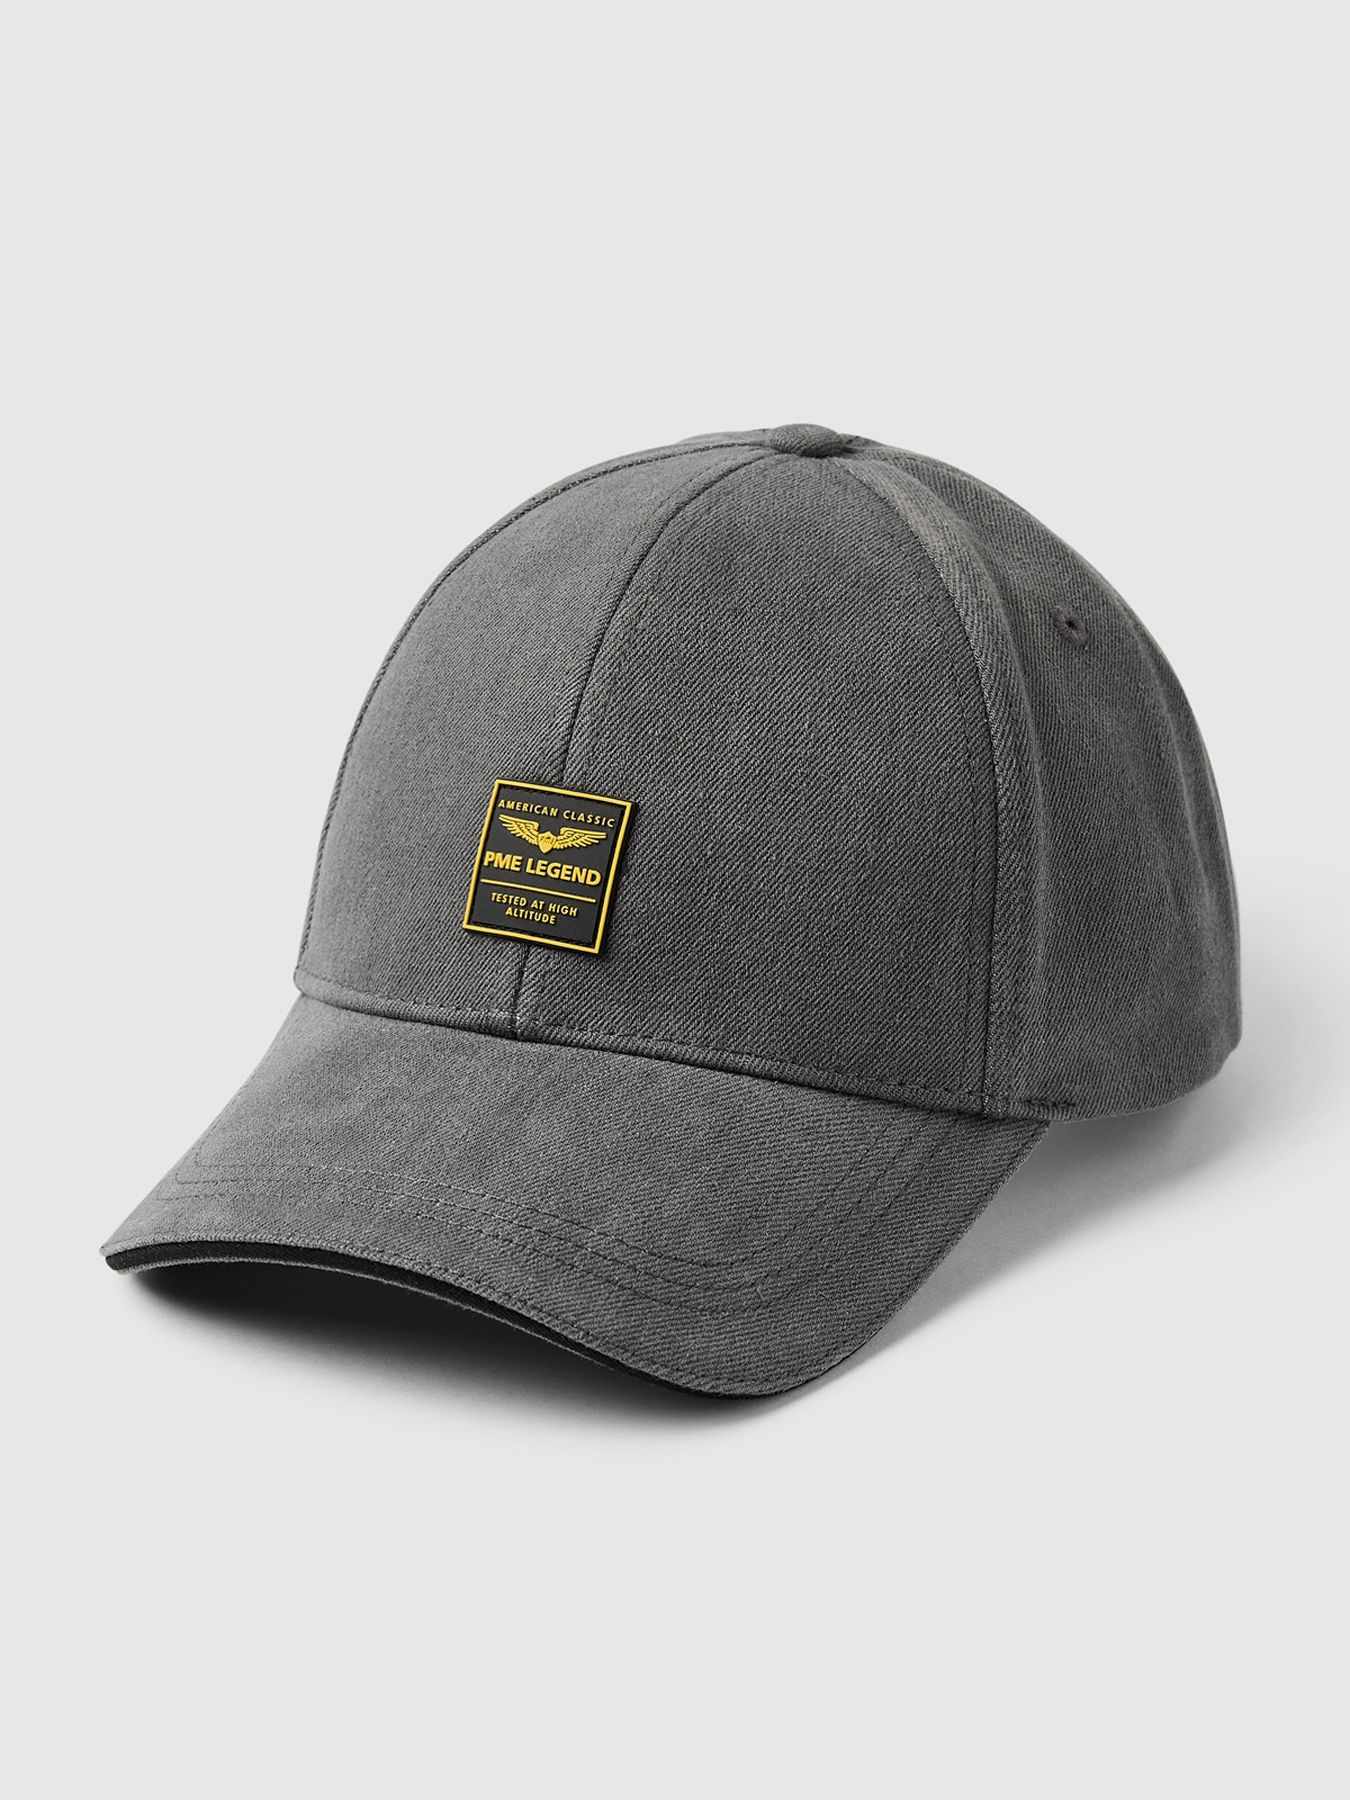 Pme Legend Cap Denim cap with ruber badge Grey Denim 00105125-GDN